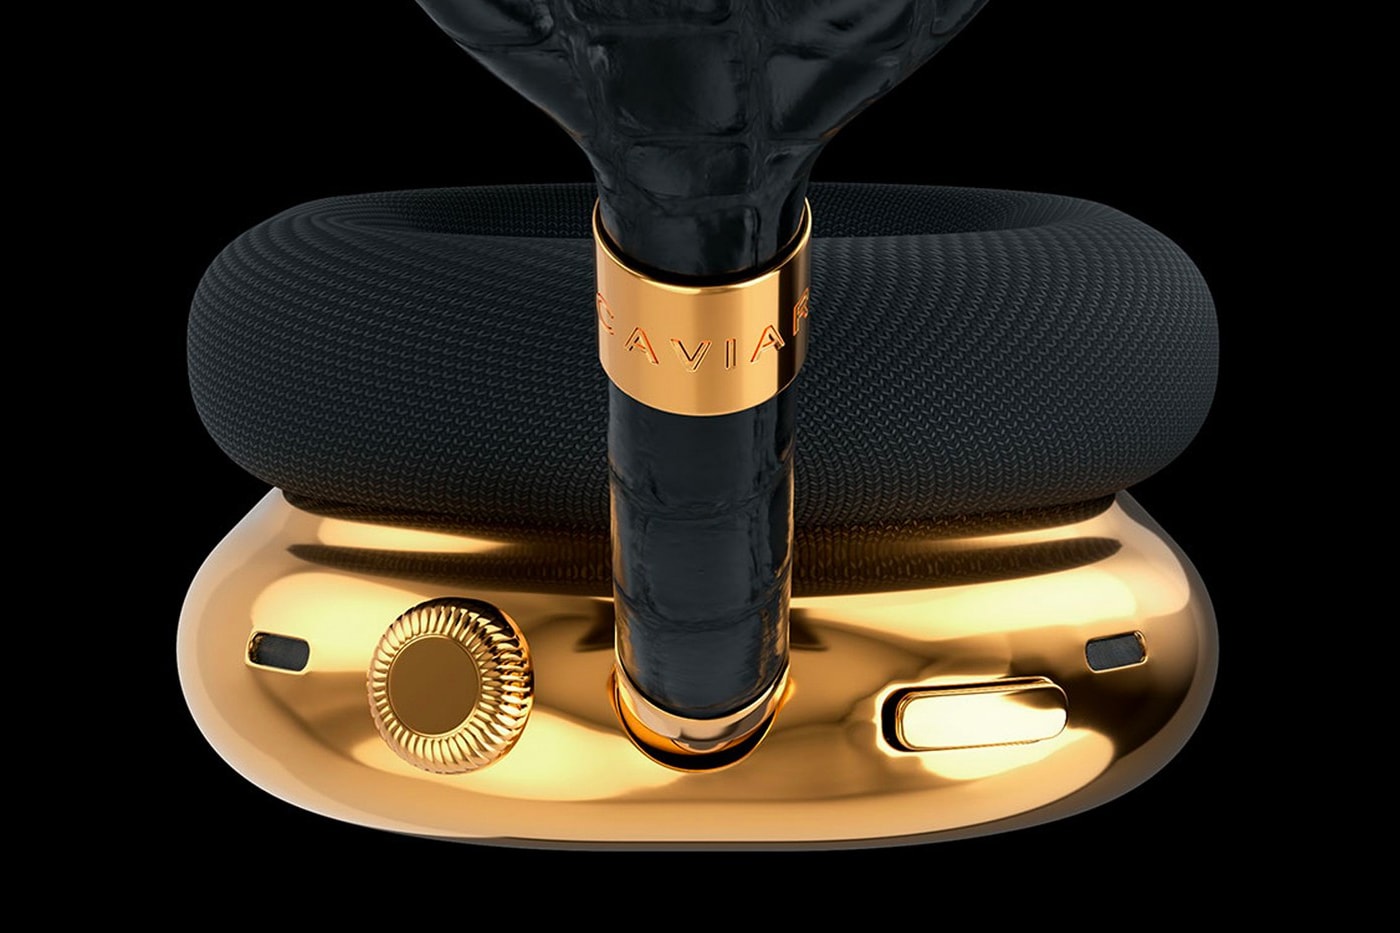 Caviar 108 000 USD Pure Gold Apple AirPods Max Release Info Buy black white